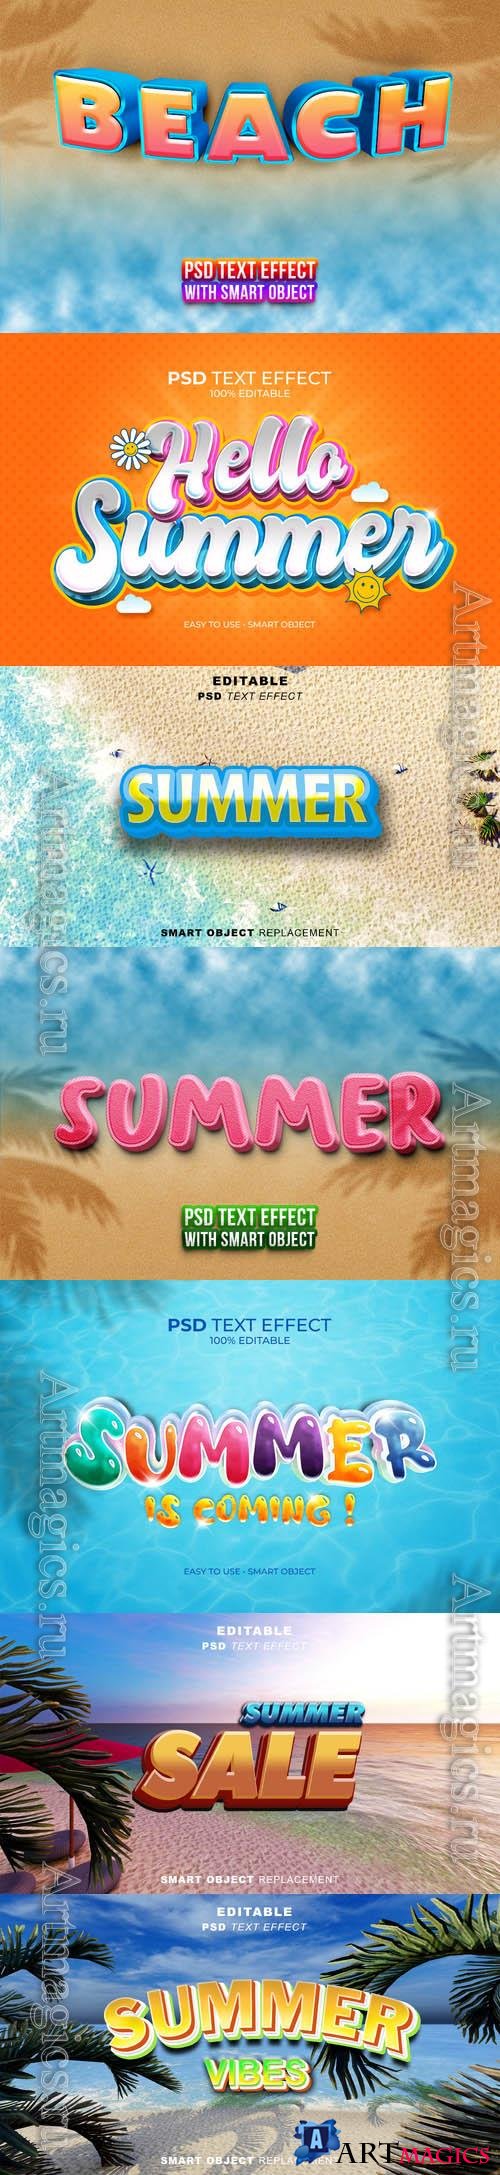 Psd style text effect editable set vol 457